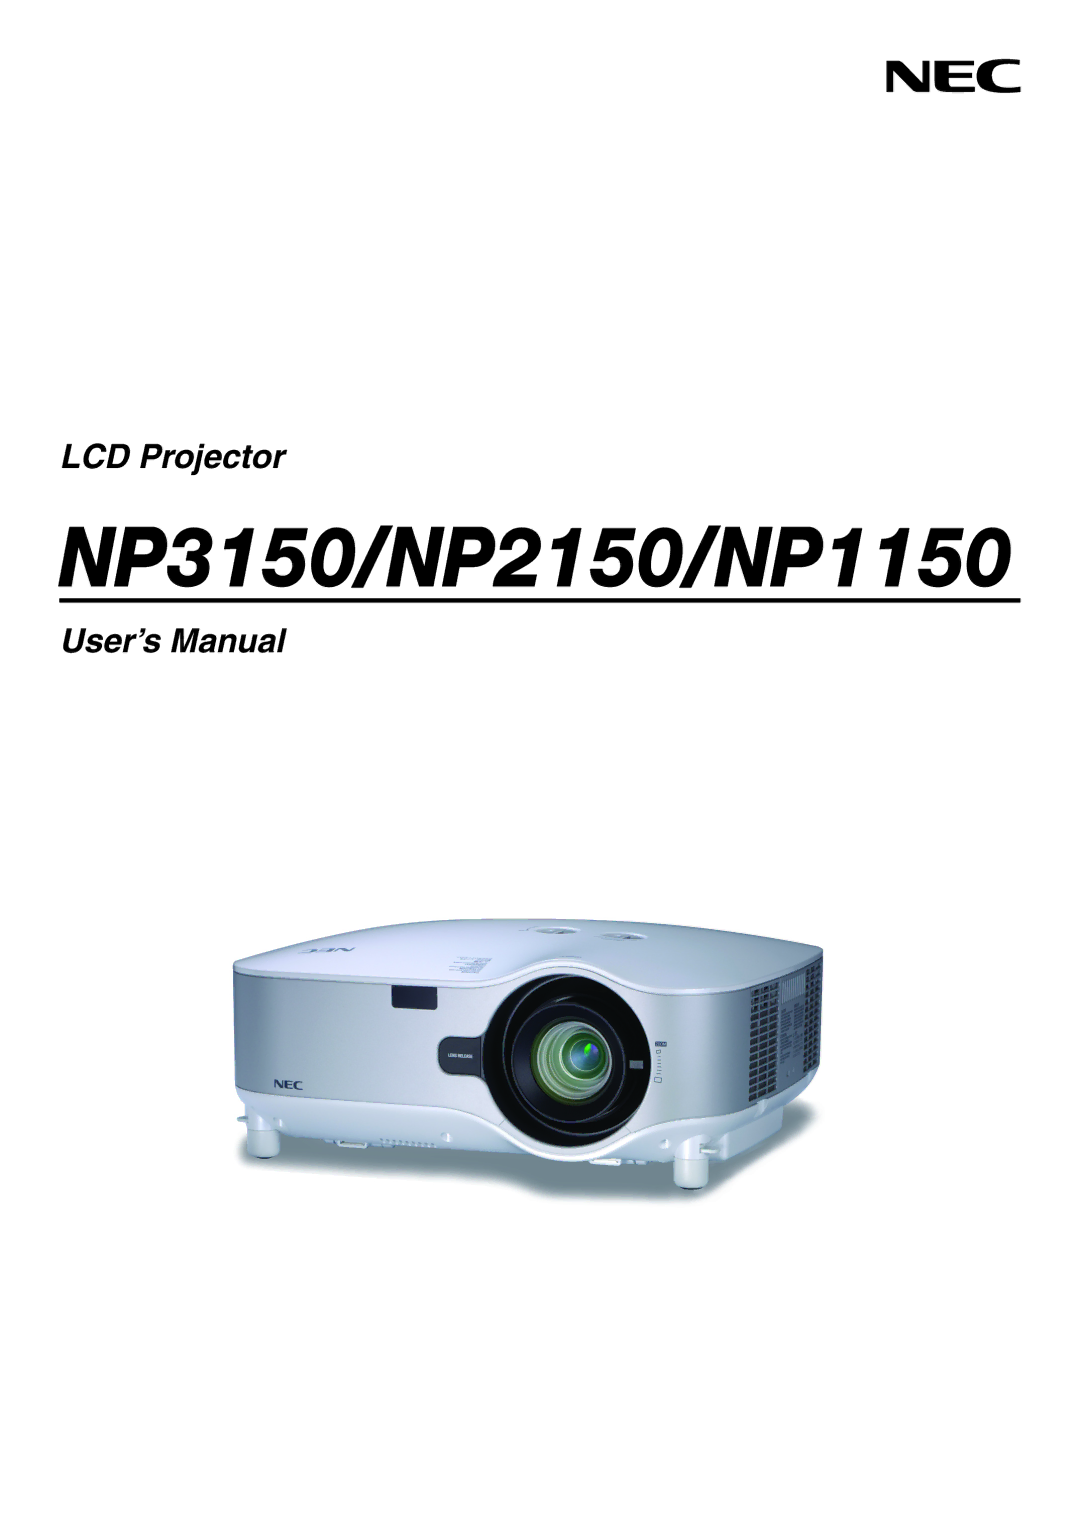 NEC user manual NP3150/NP2150/NP1150 